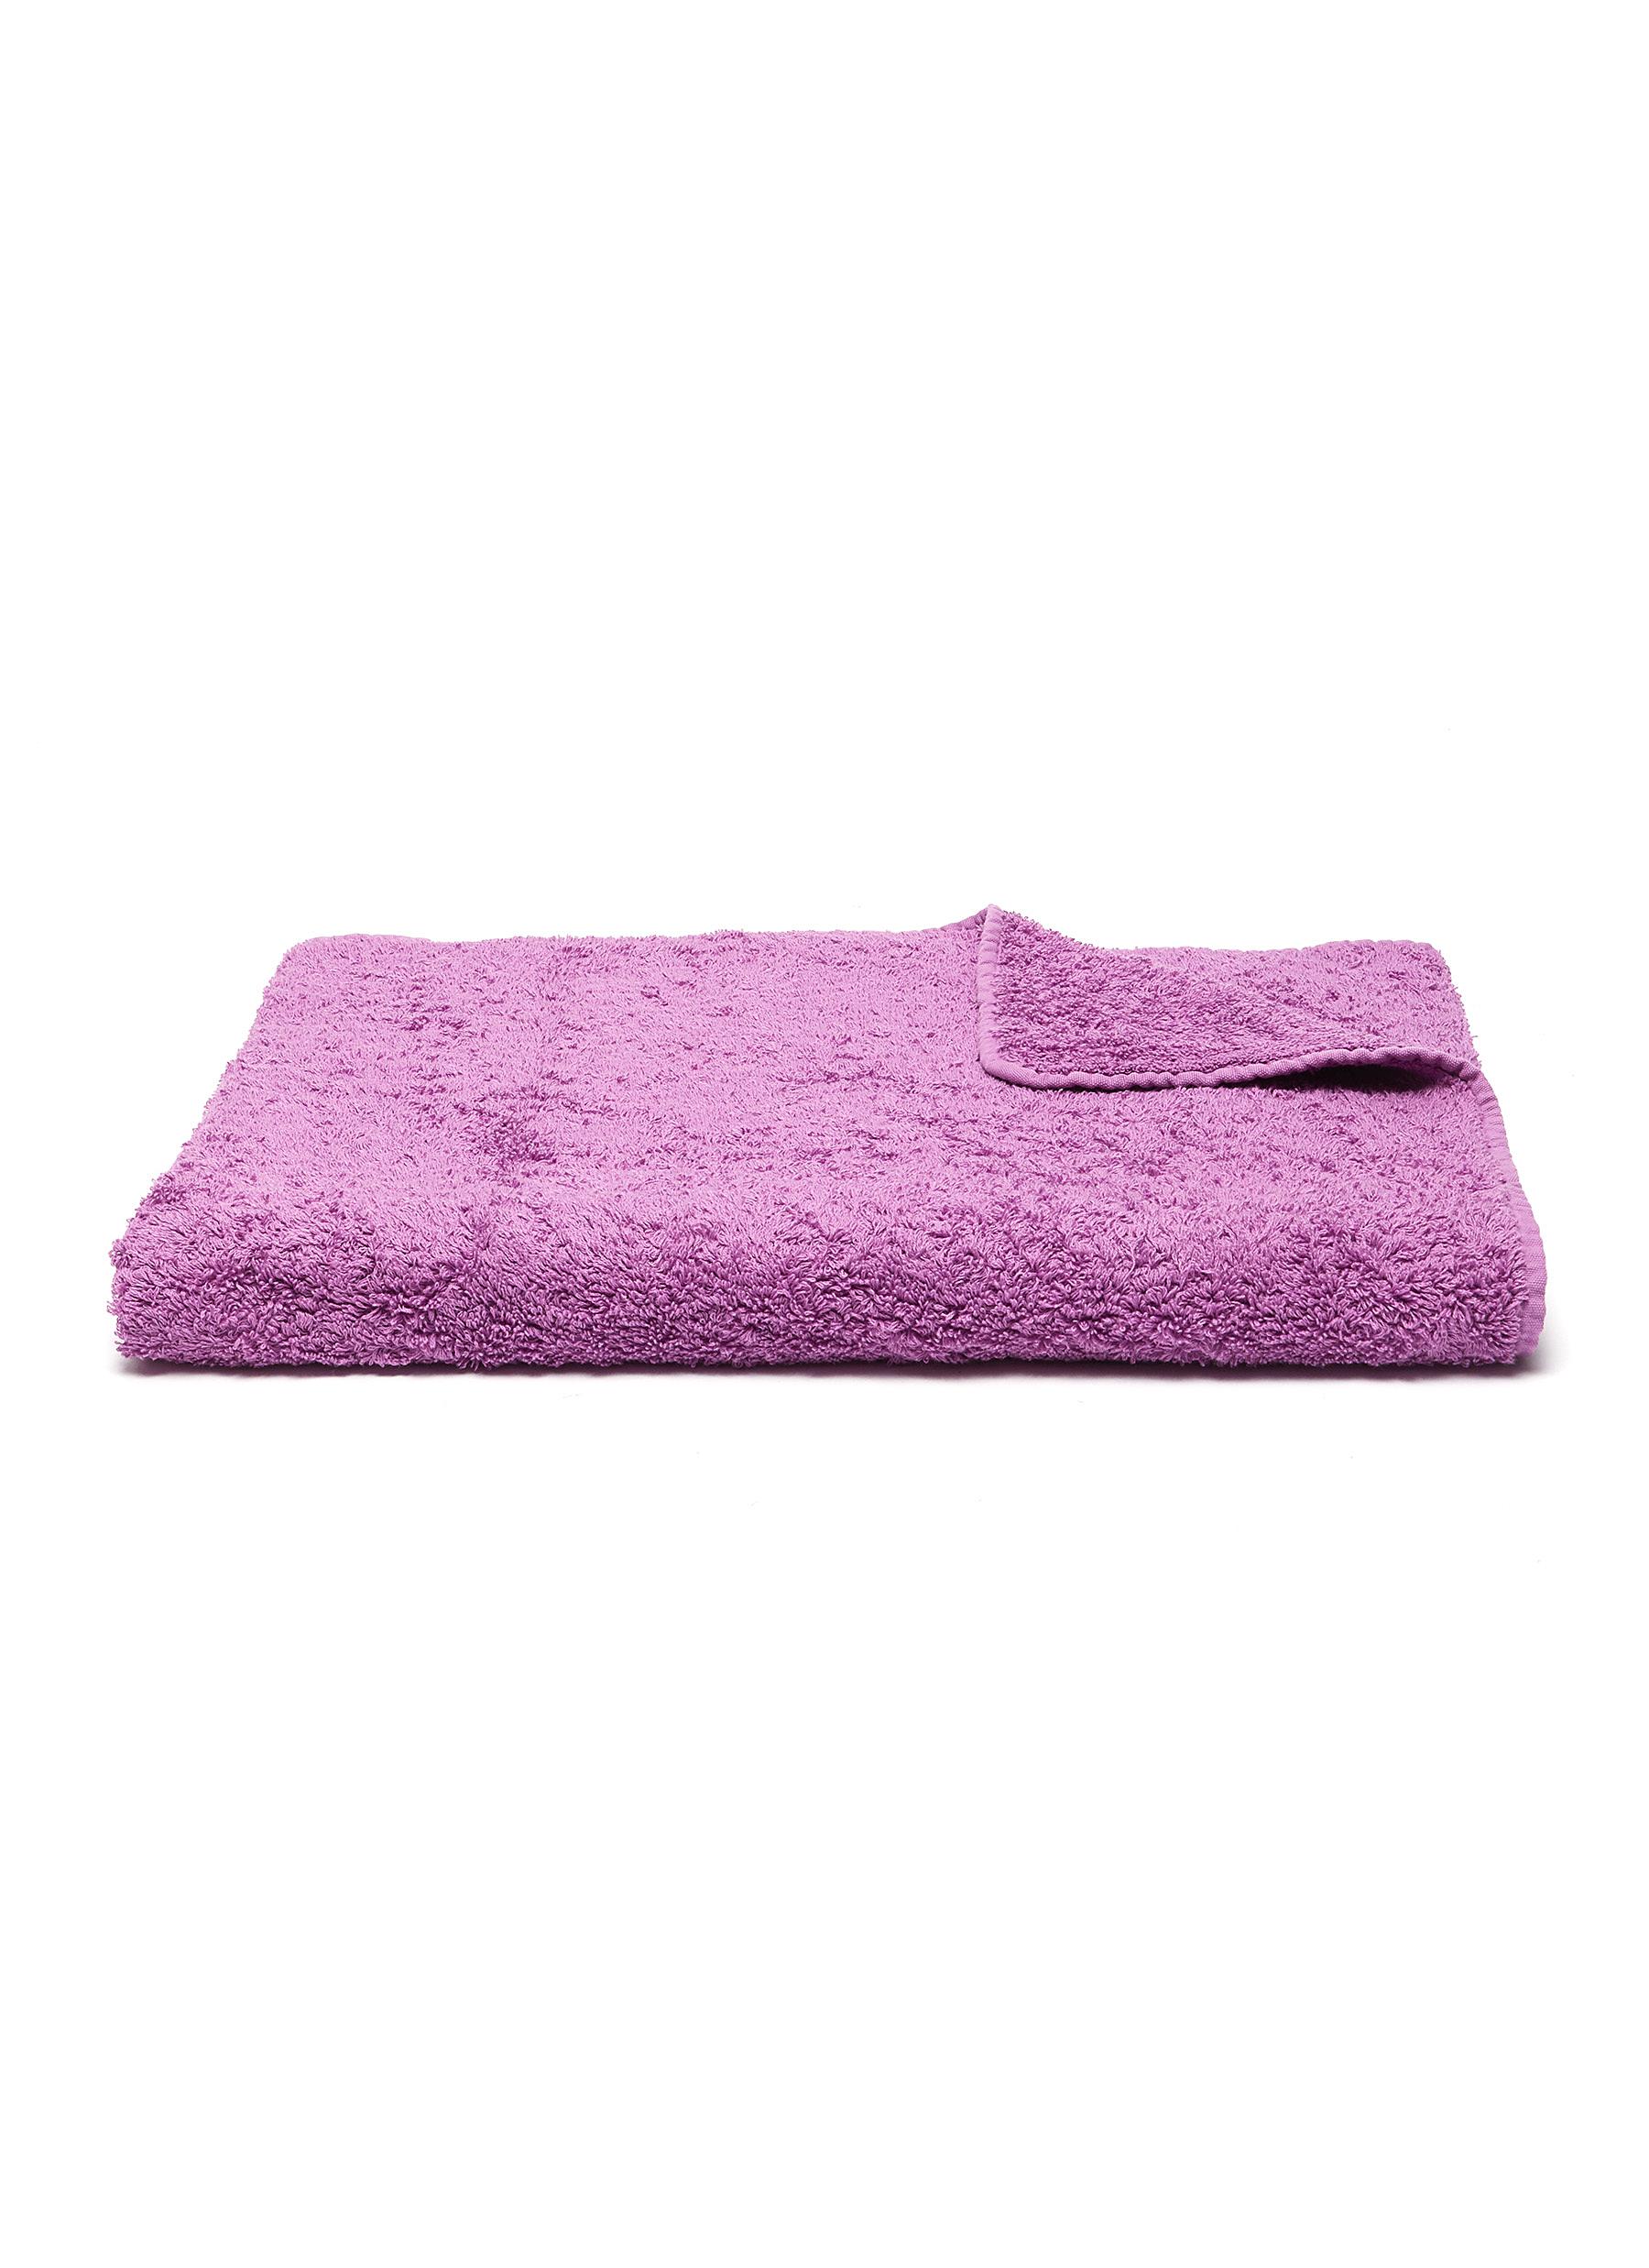 Abyss Super Pile Cotton Bath Towel - Dalhia